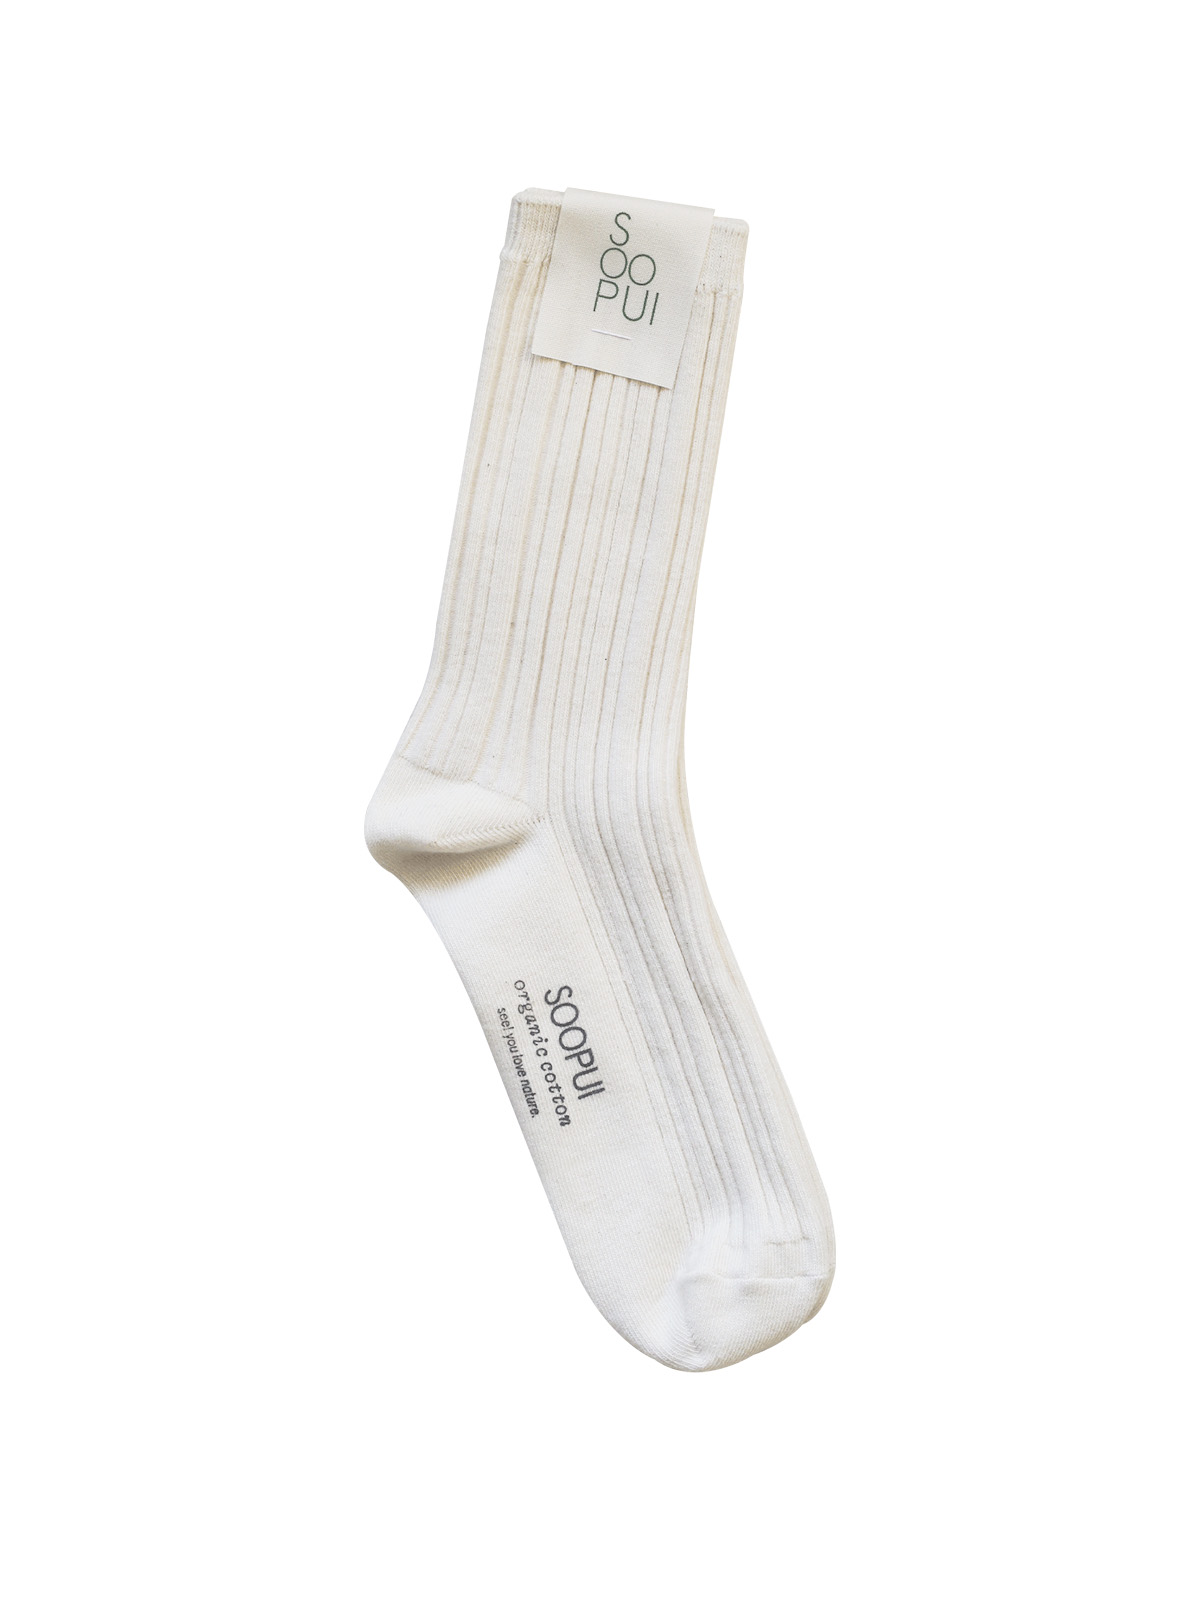 Organic cotton socks in raw white